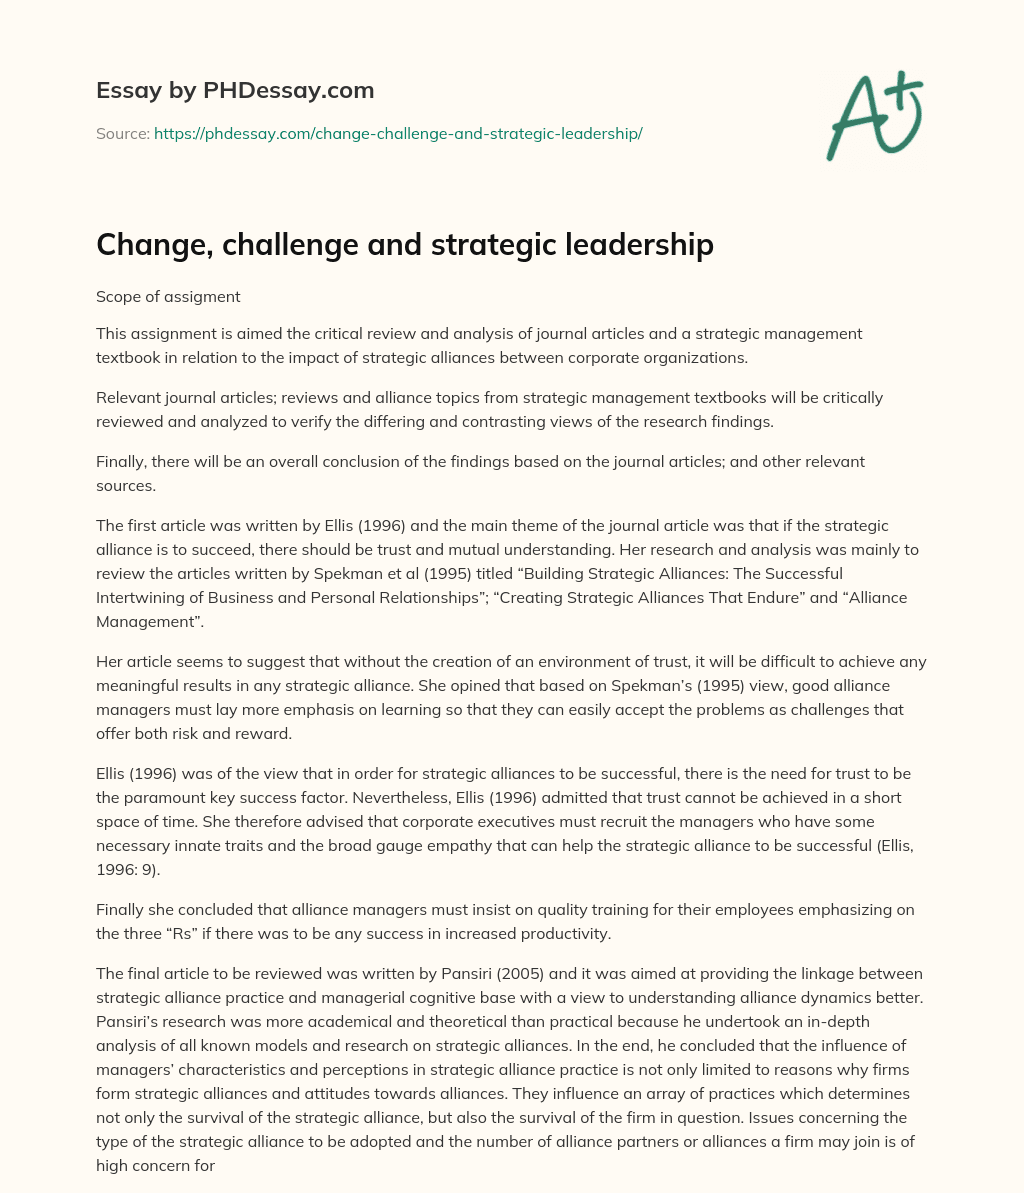 Change, challenge and strategic leadership essay